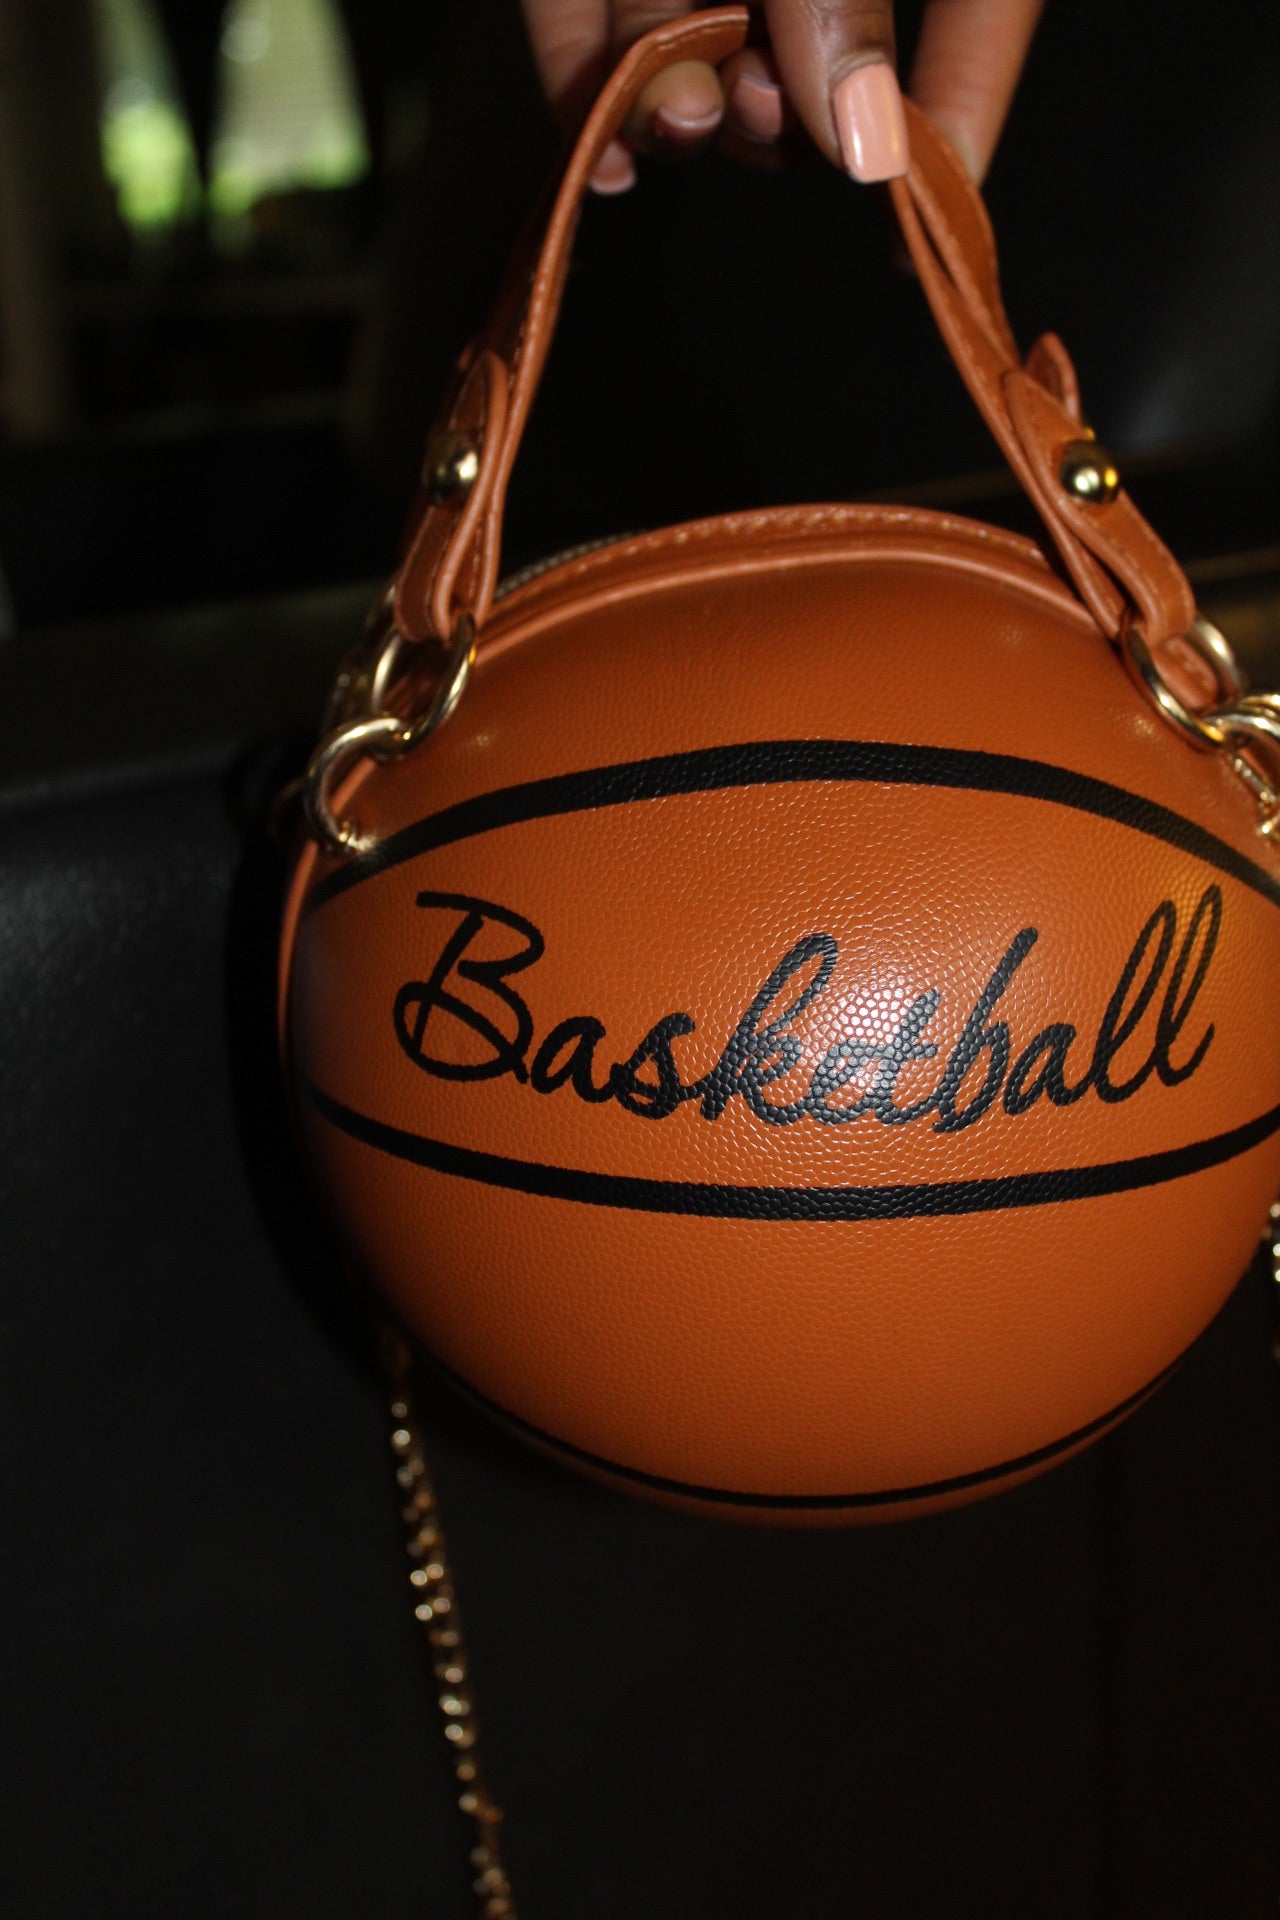 Mini basket ball purse